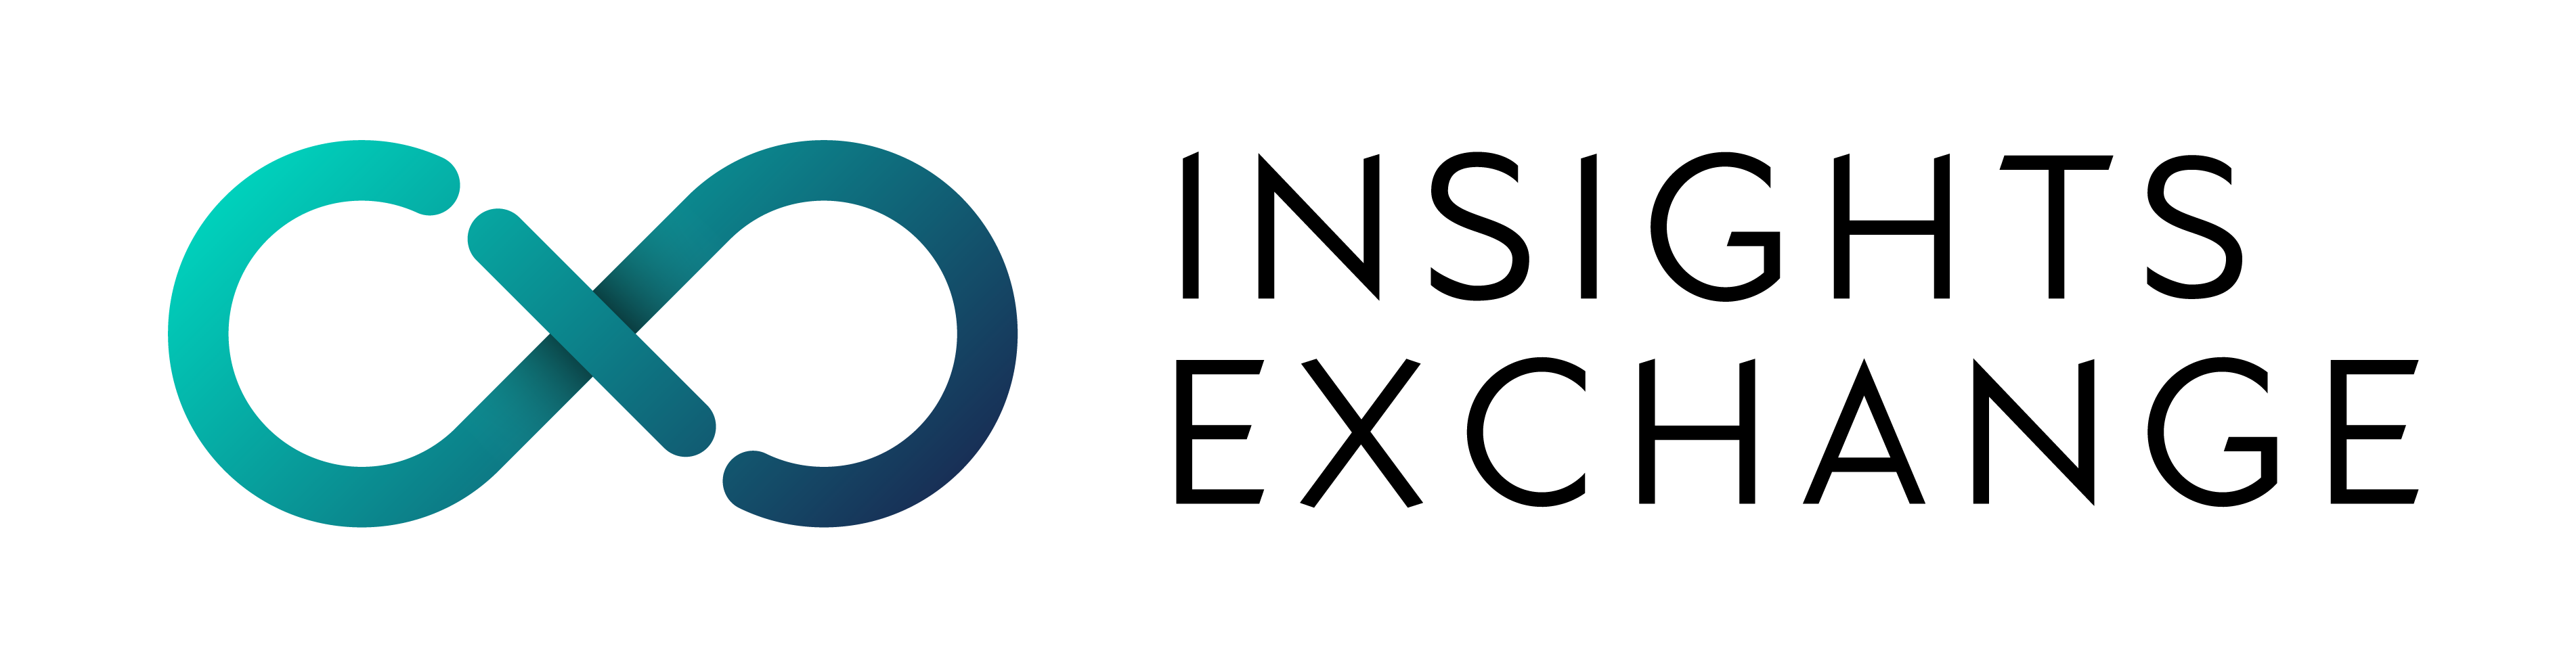 Insights Exchange logo